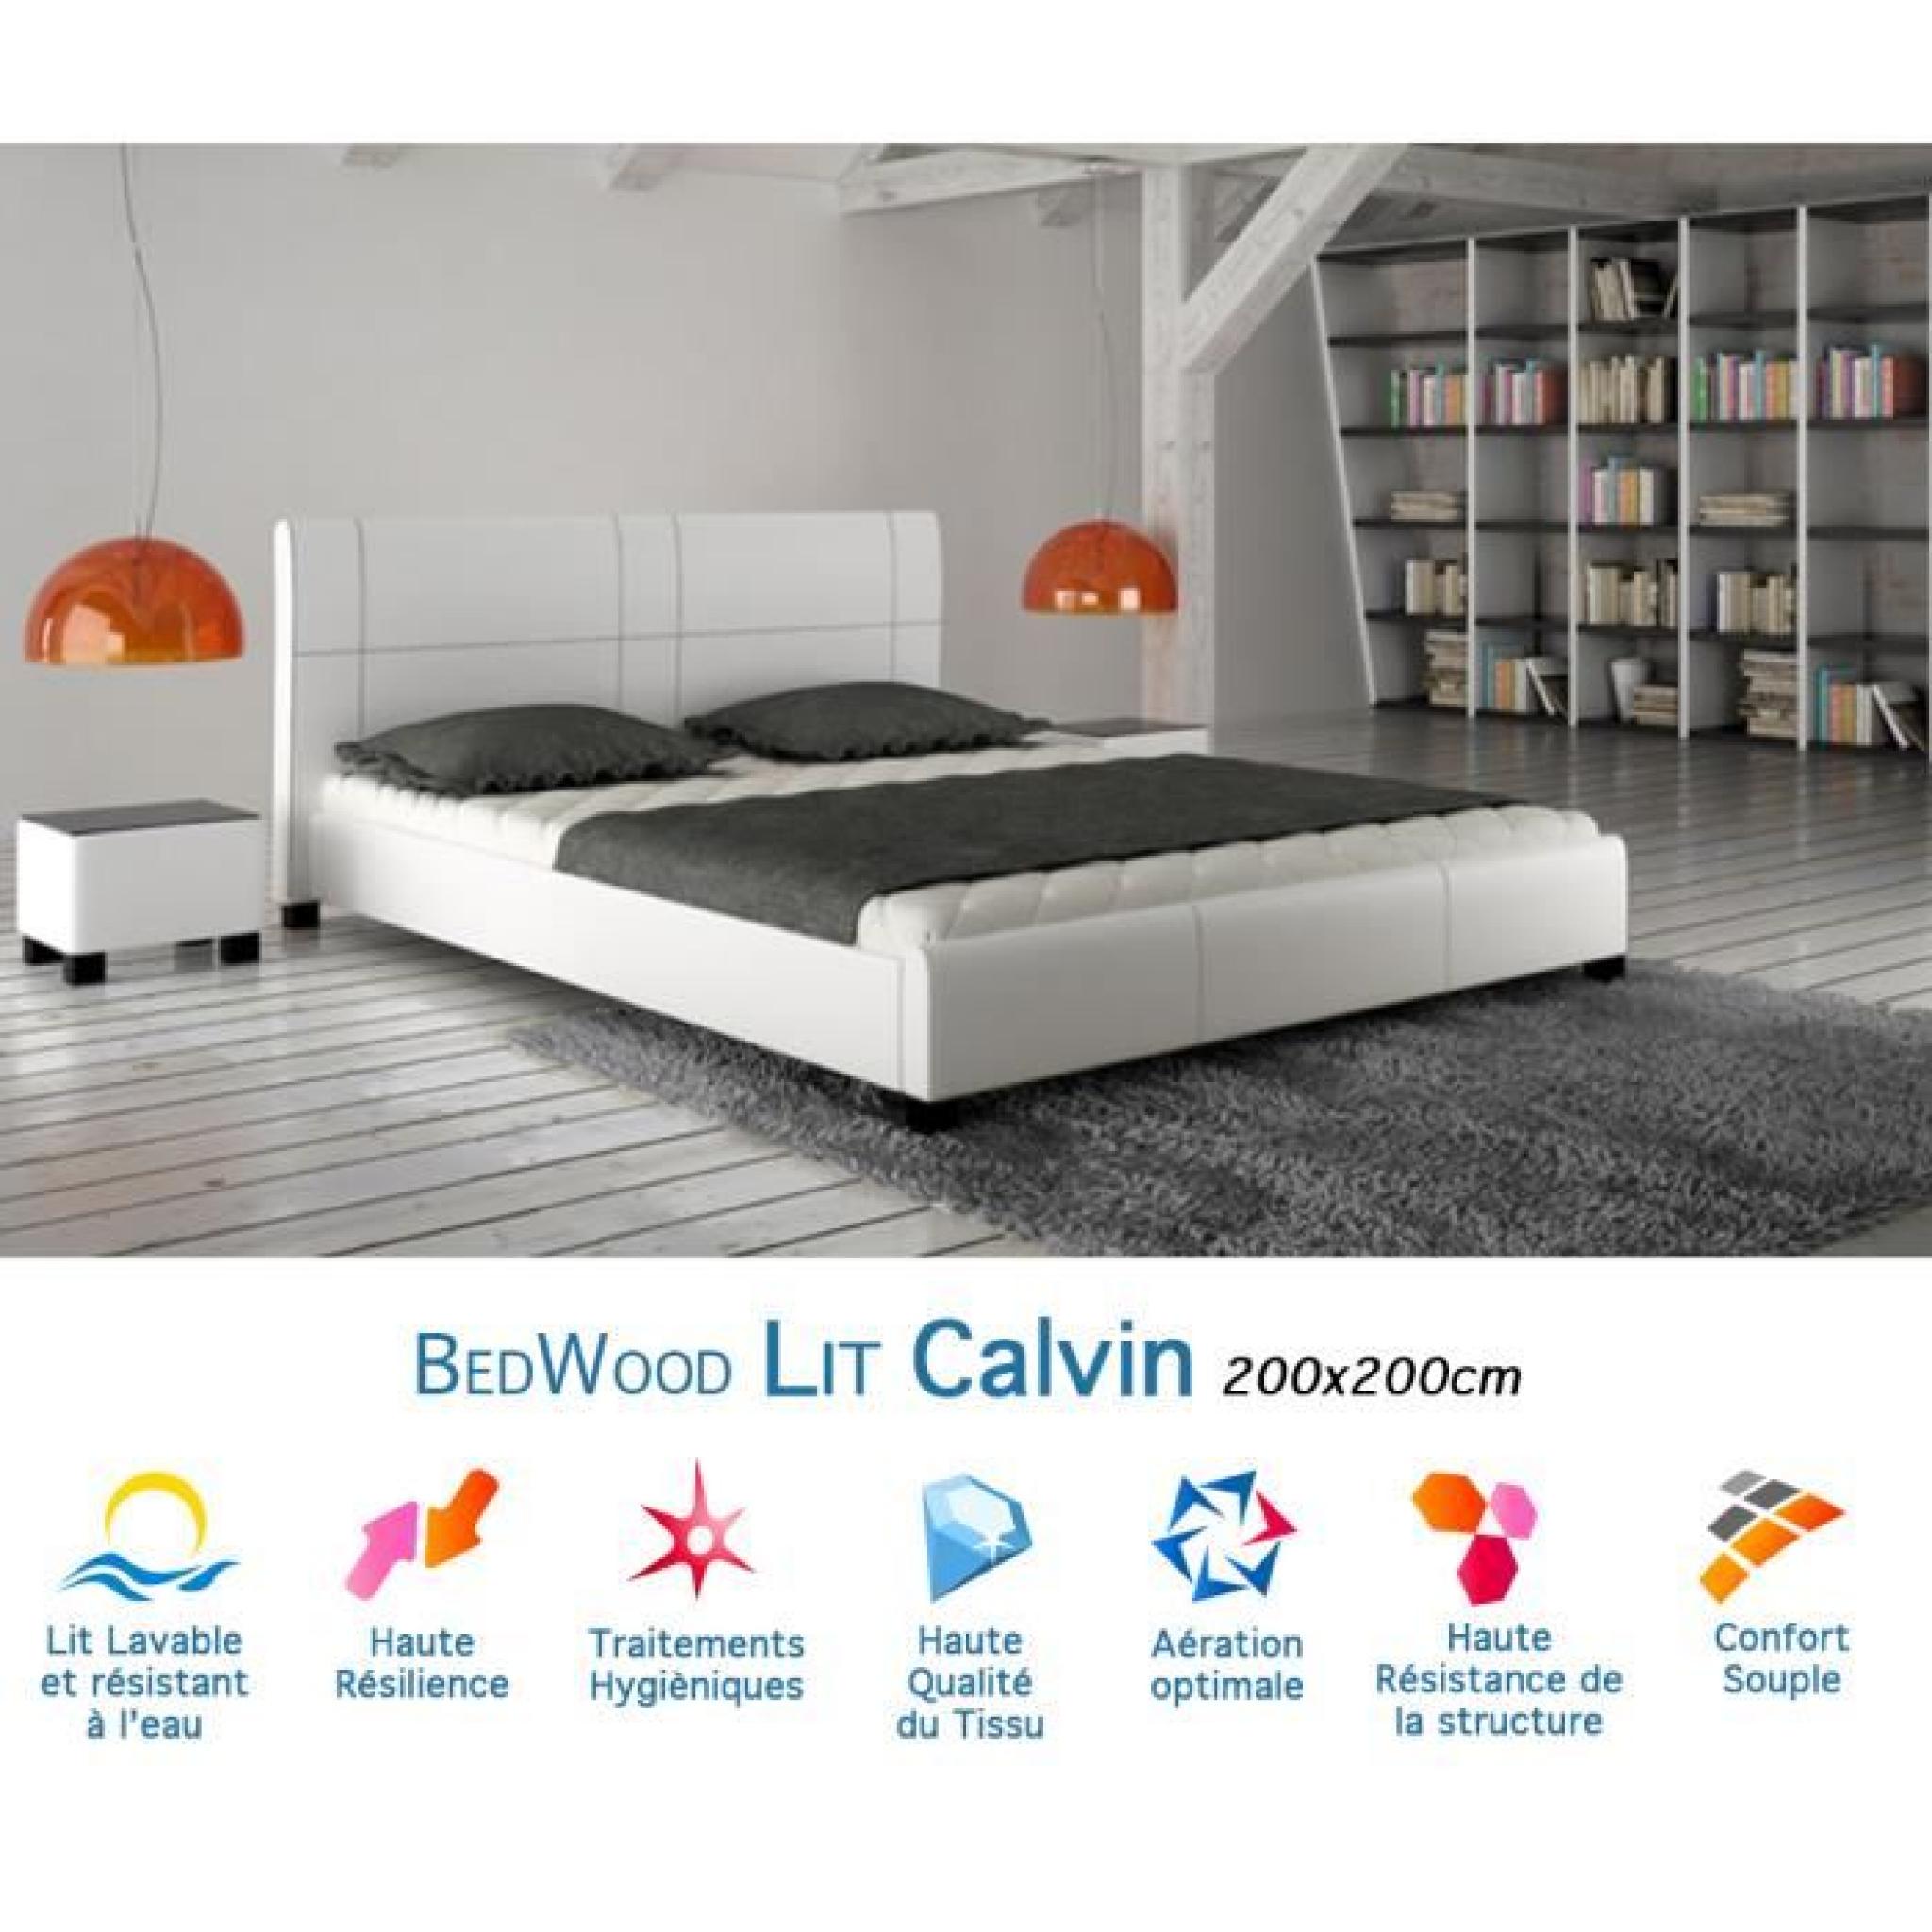 Lit Design Bedwood Calvin 200x200cm